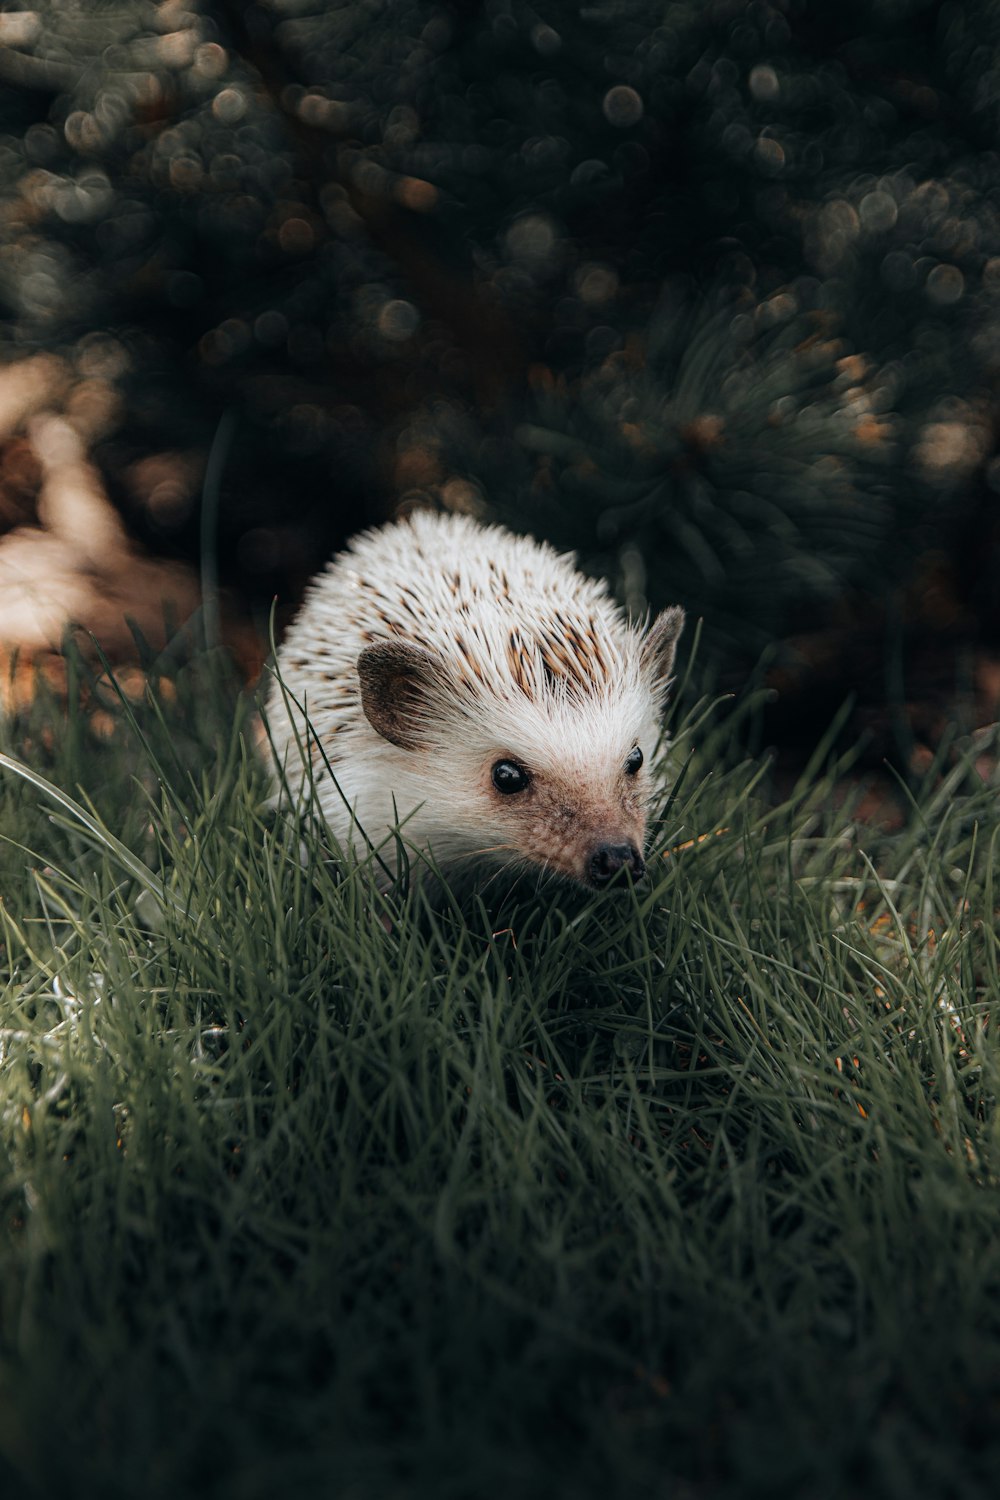 white hedgehog on green grass during daytime